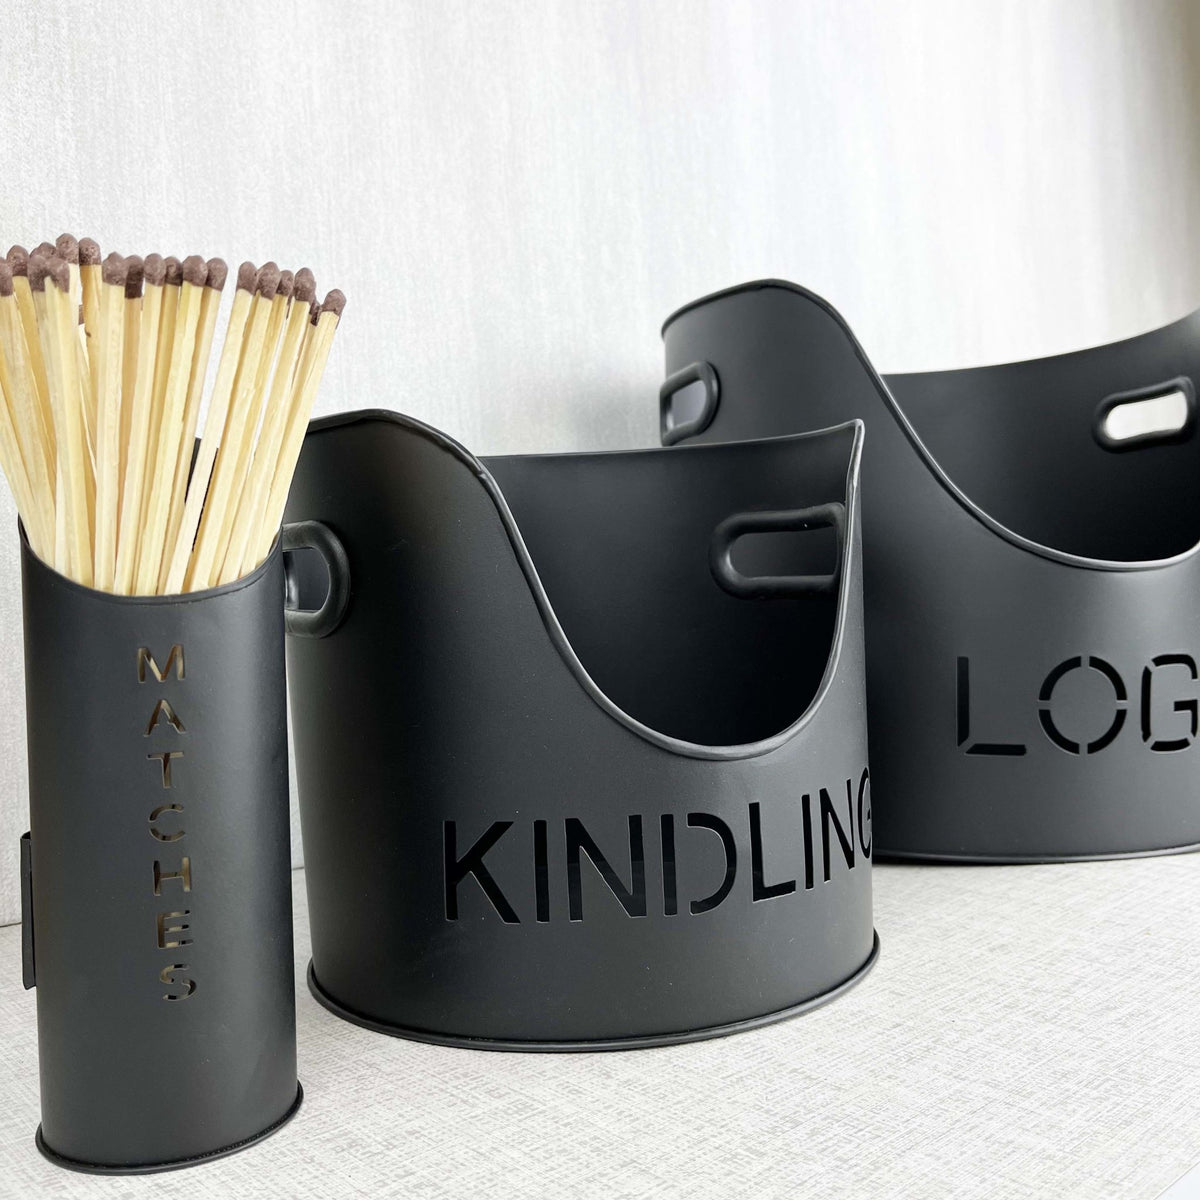 Fire Log & Kindling Buckets with Matchstick Holder Set